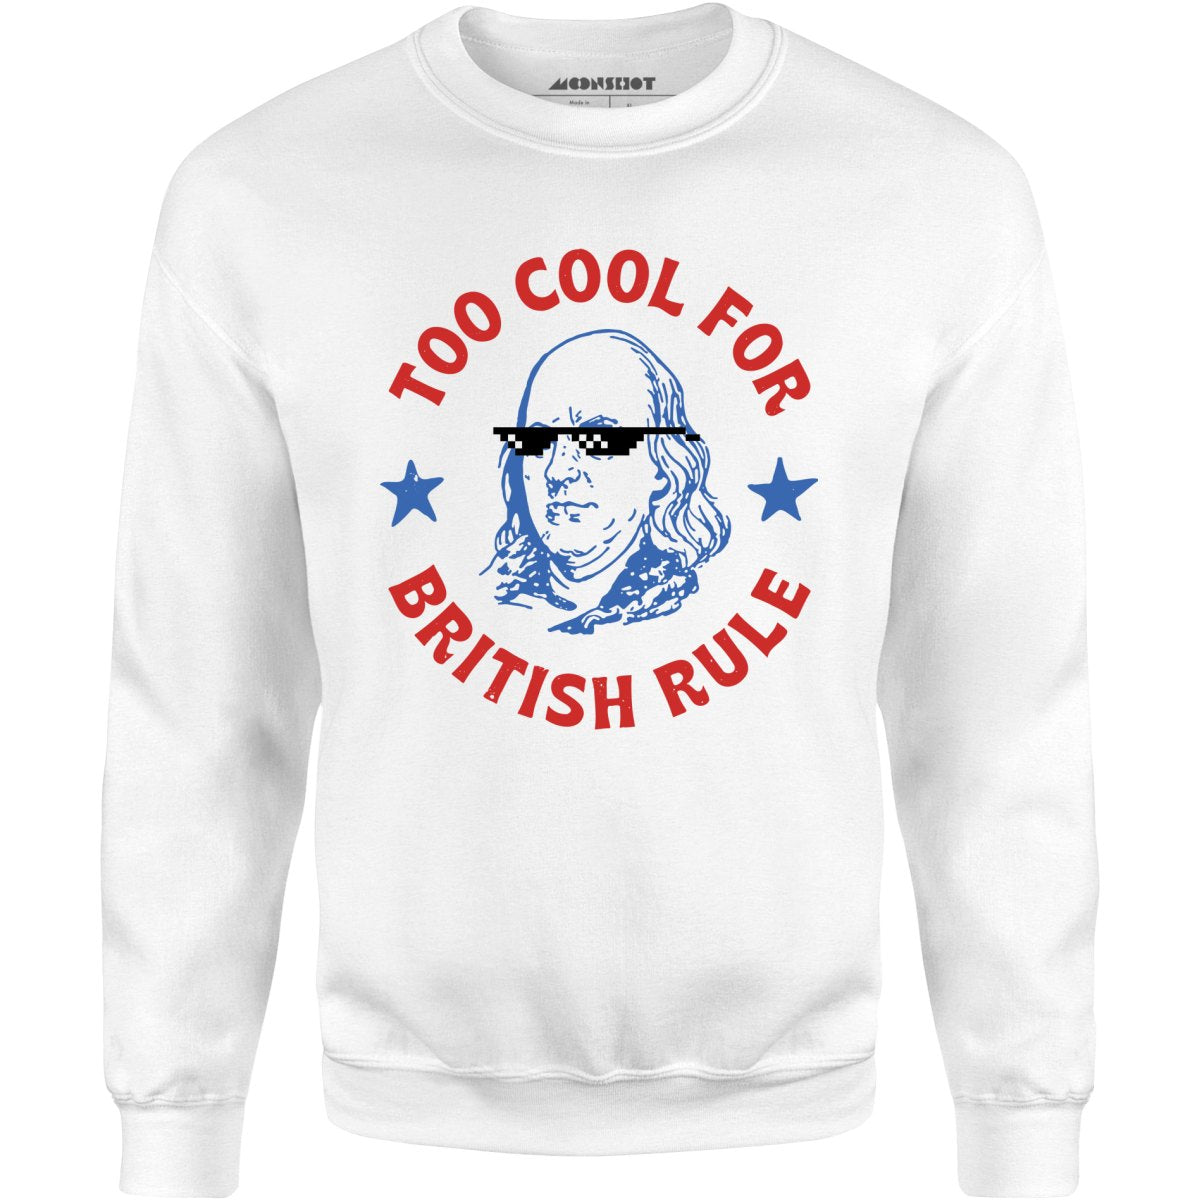 Too Cool For British Rule - Unisex Sweatshirt